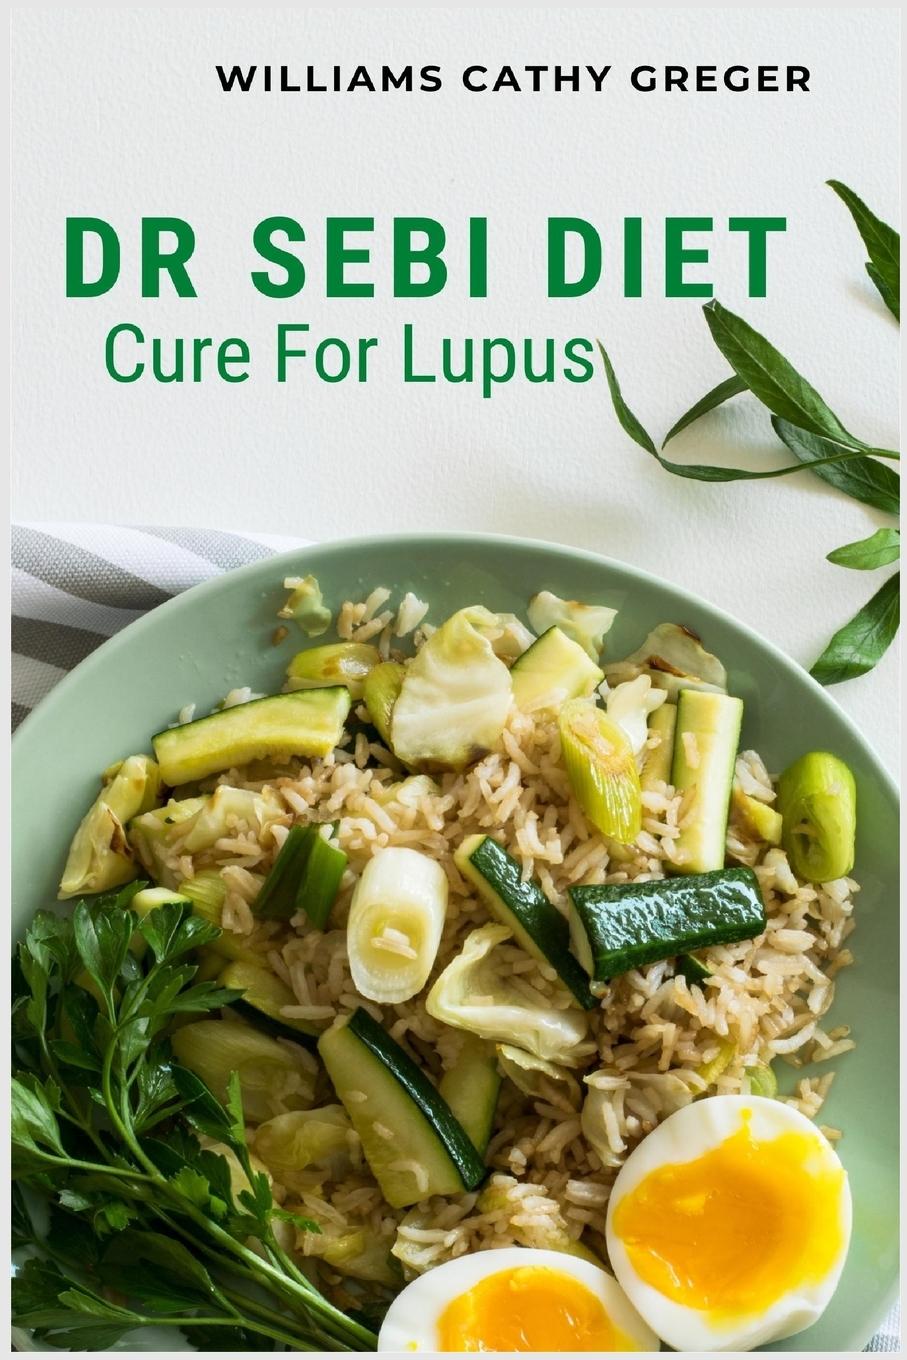 Book Dr Sebi Diet Cure For Lupus 